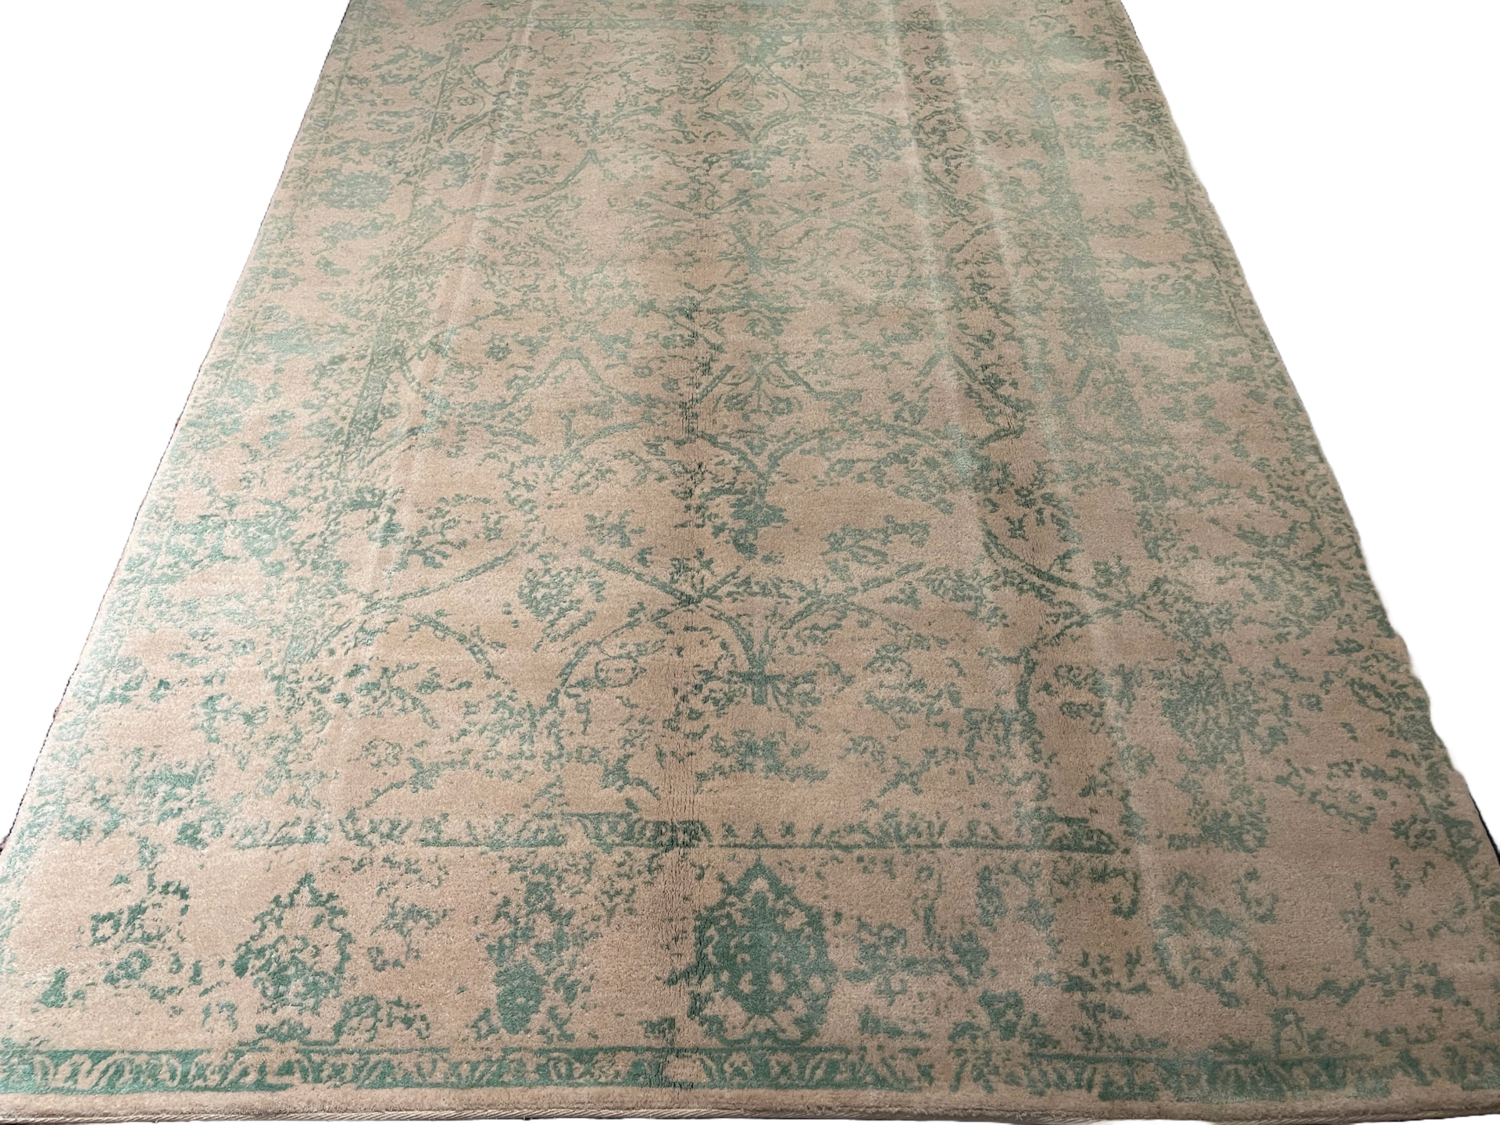 Jaipur Teppich handgeknüpft sehr fein Wolle/Bambusseide 170cm x 240cm